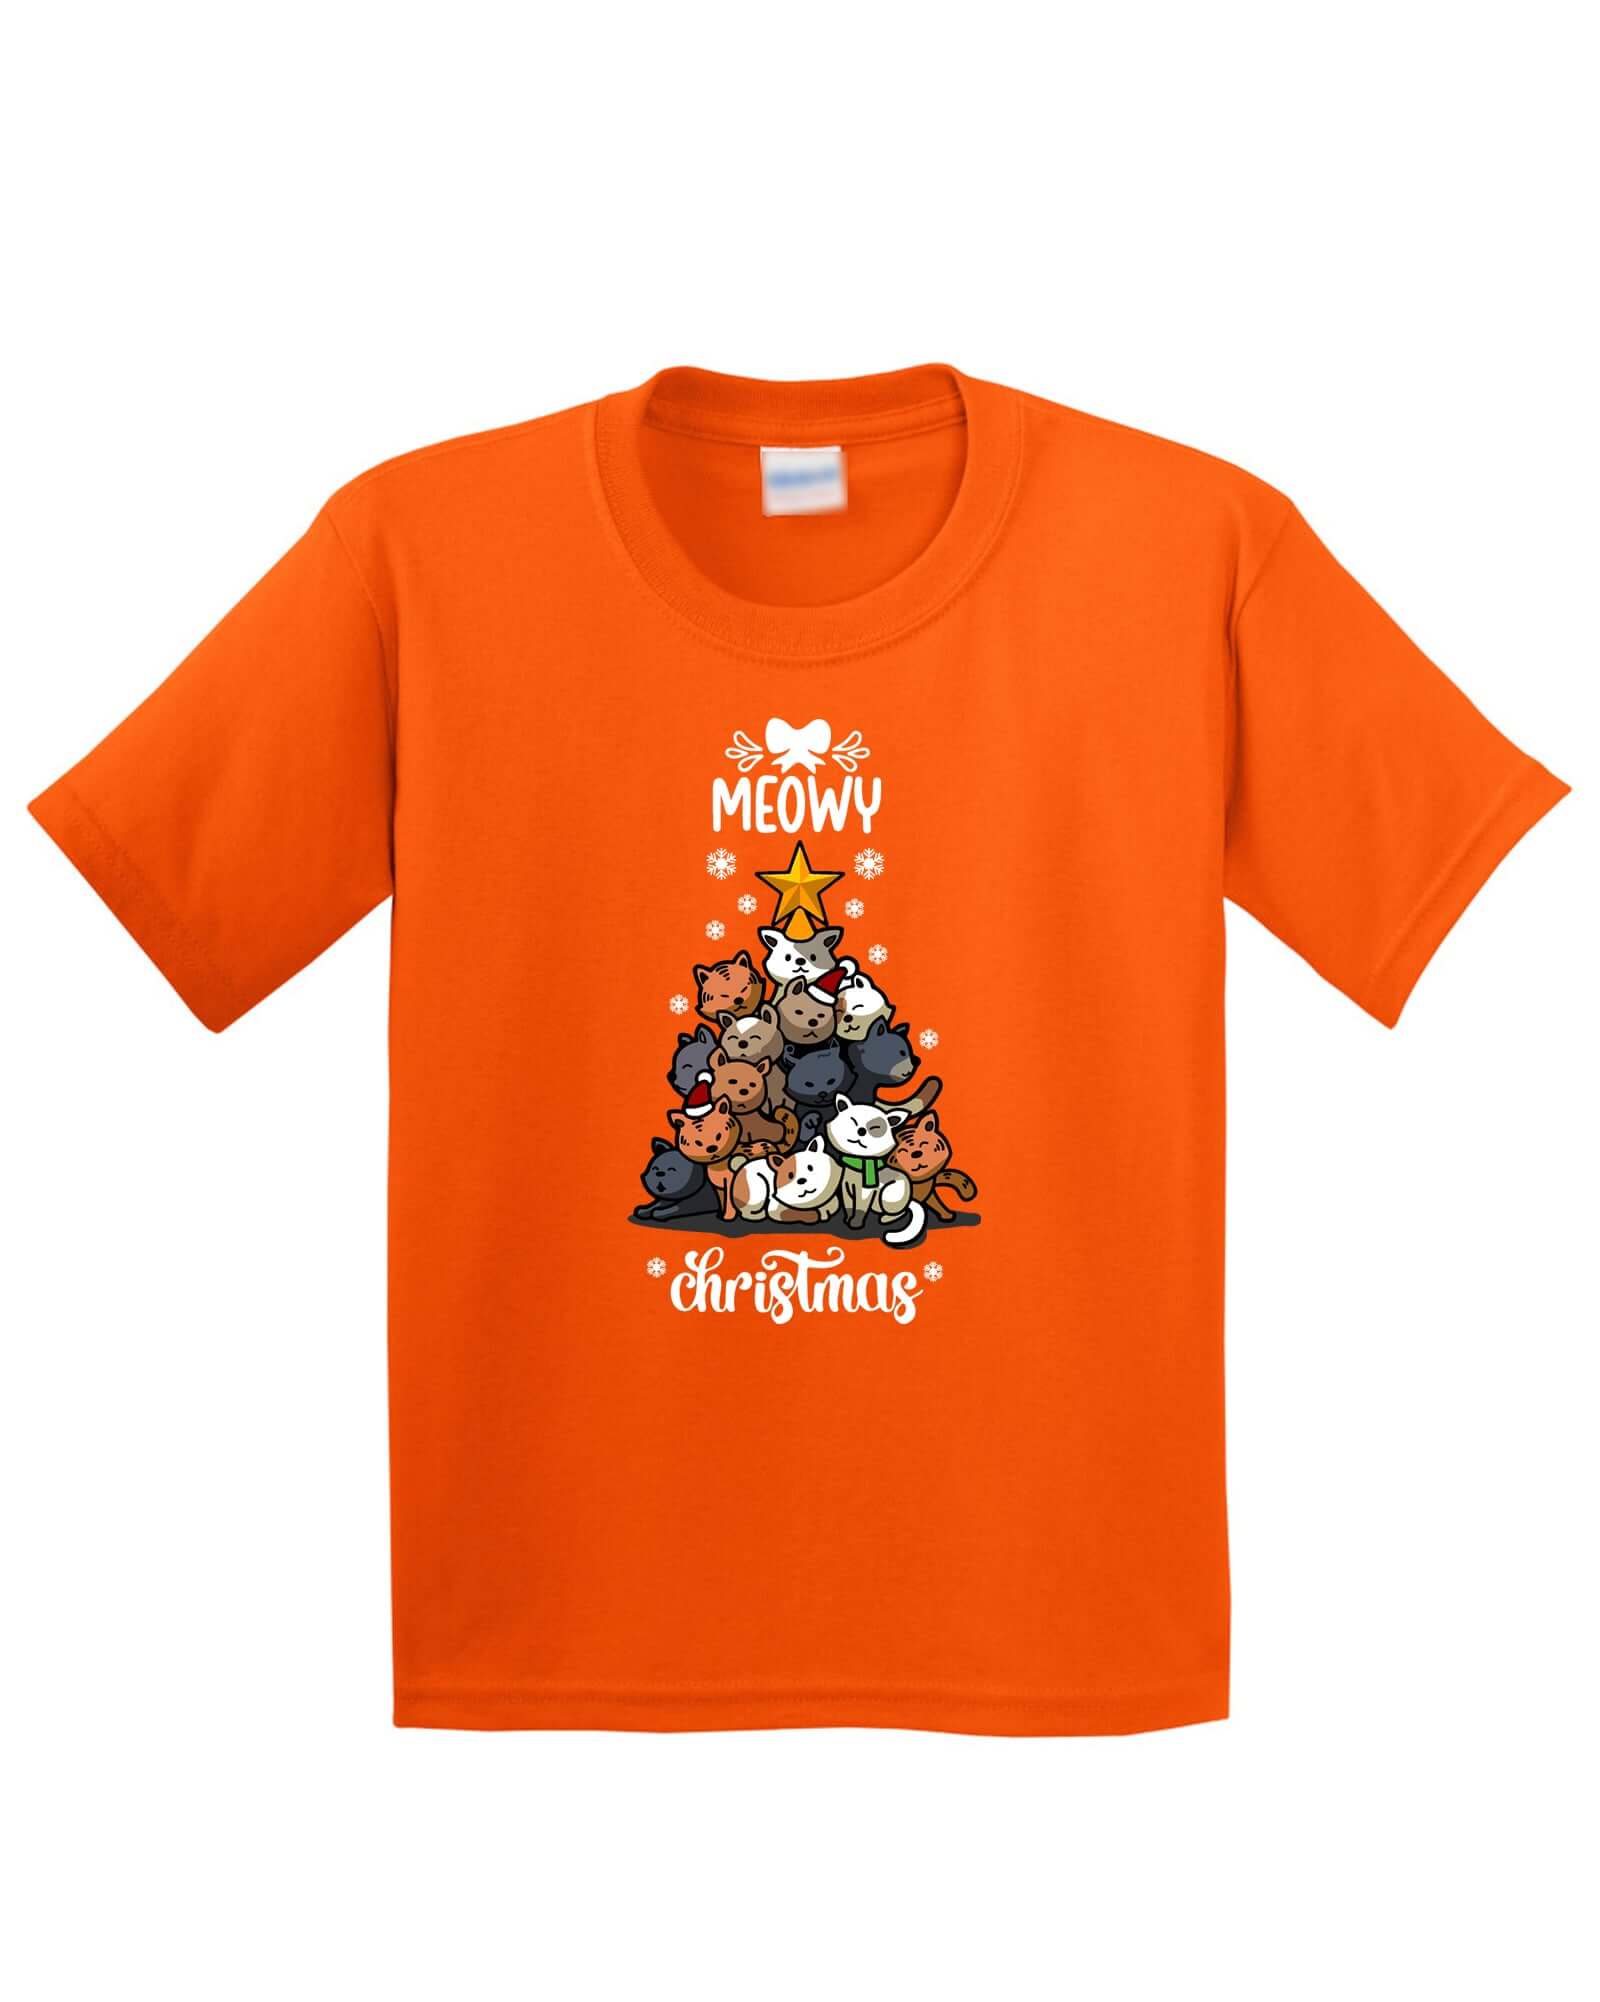 Meowy Christmas Kids T-Shirt - ApparelinClick